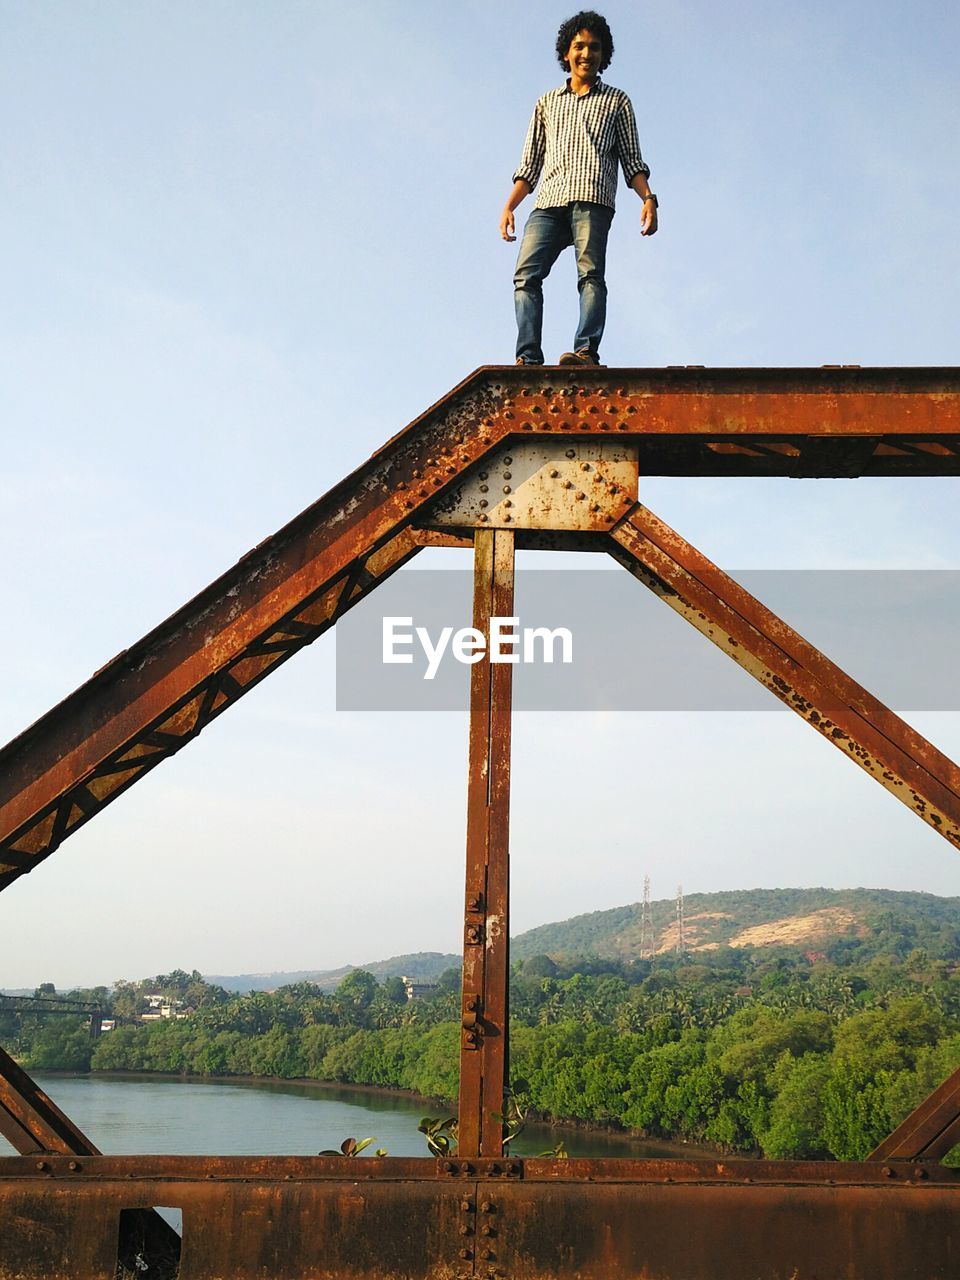 Low angle view of man standing on rusty metallic borim bridge against sky